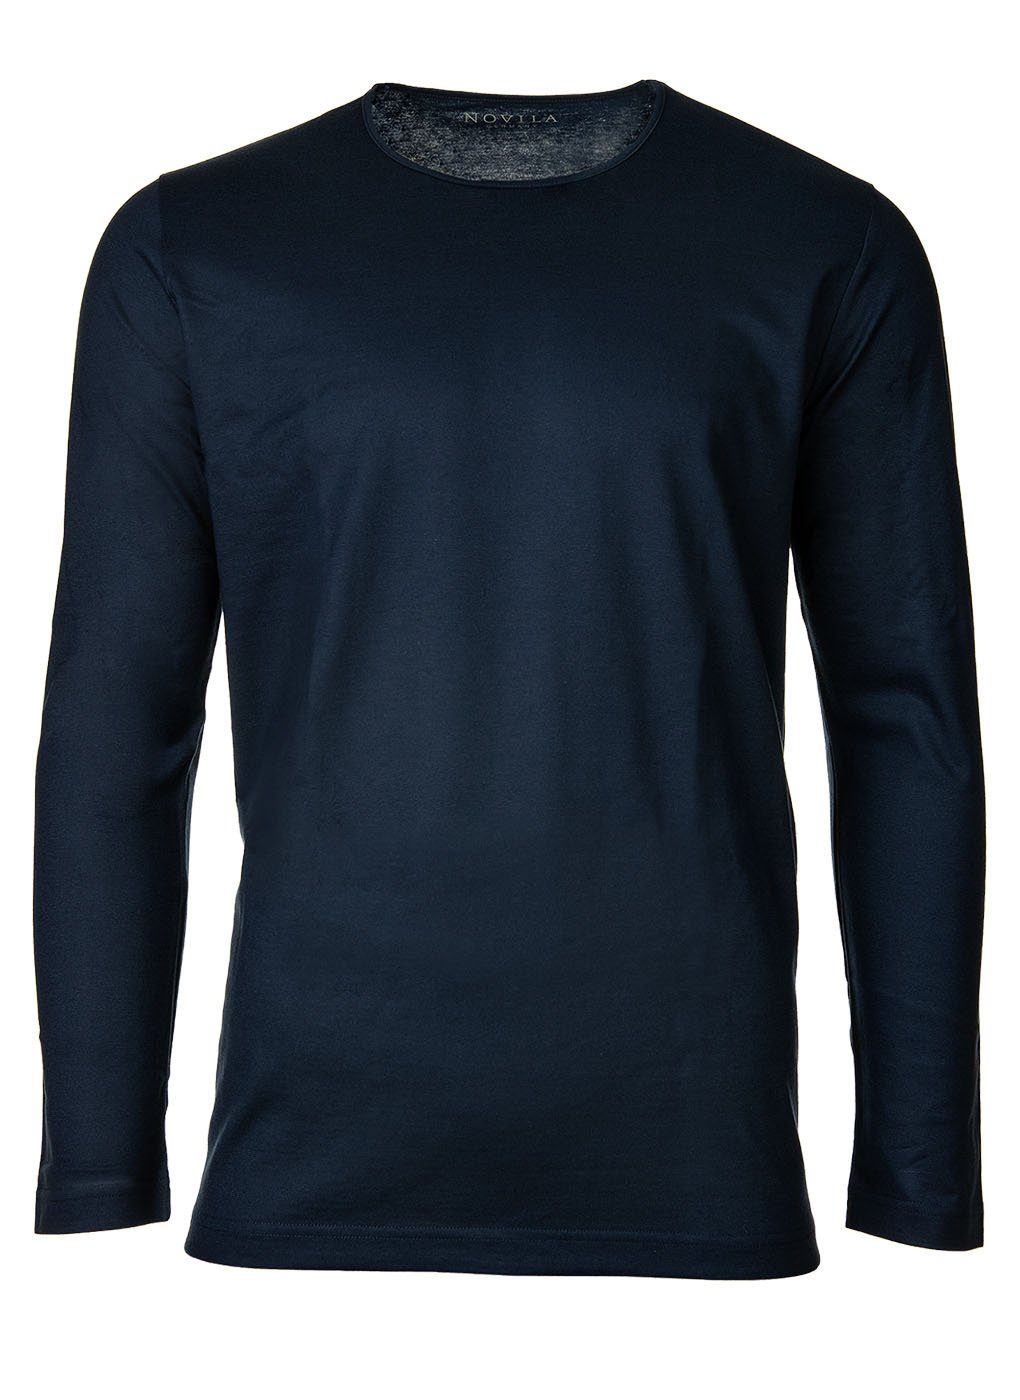 Novila Sweatshirt Herren Shirt, langarm - Loungewear, Rundhals, 1/1 Marine